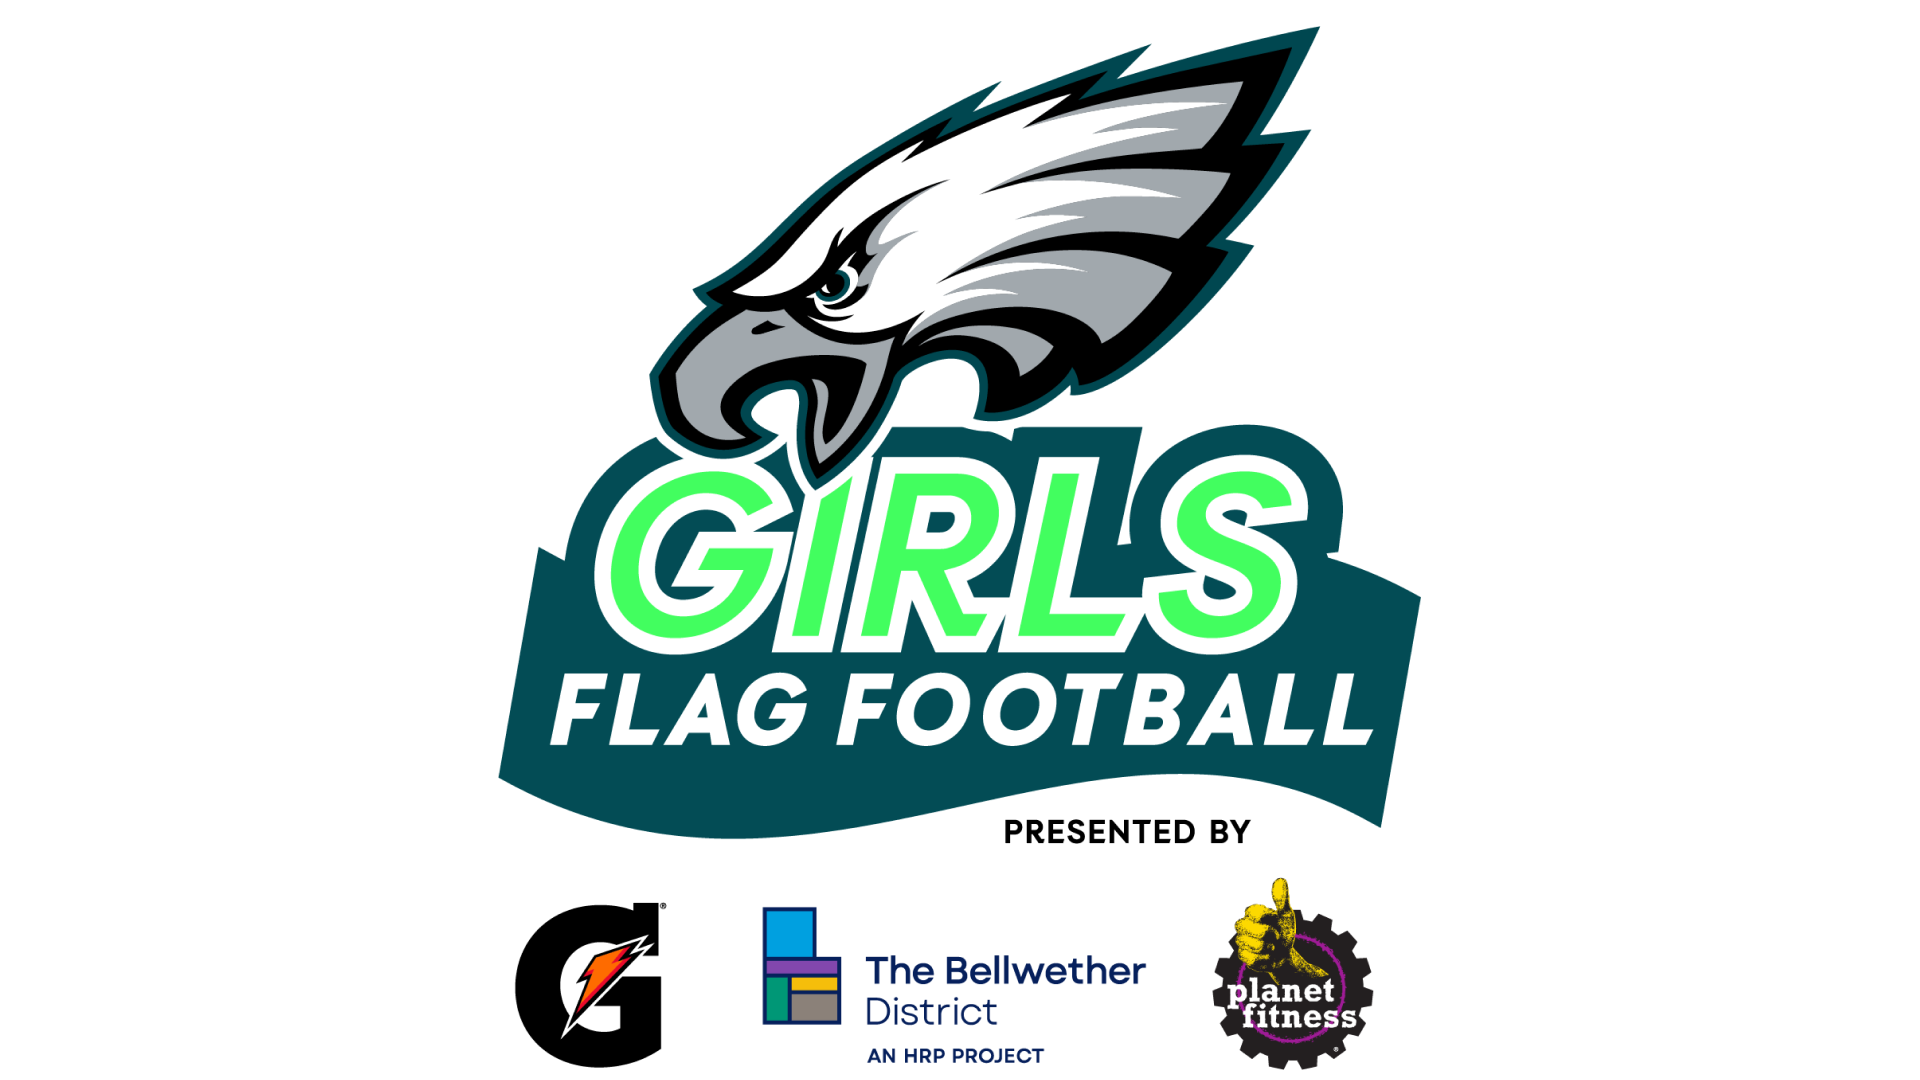 Free Falcons Flag Football Coaching Clinic